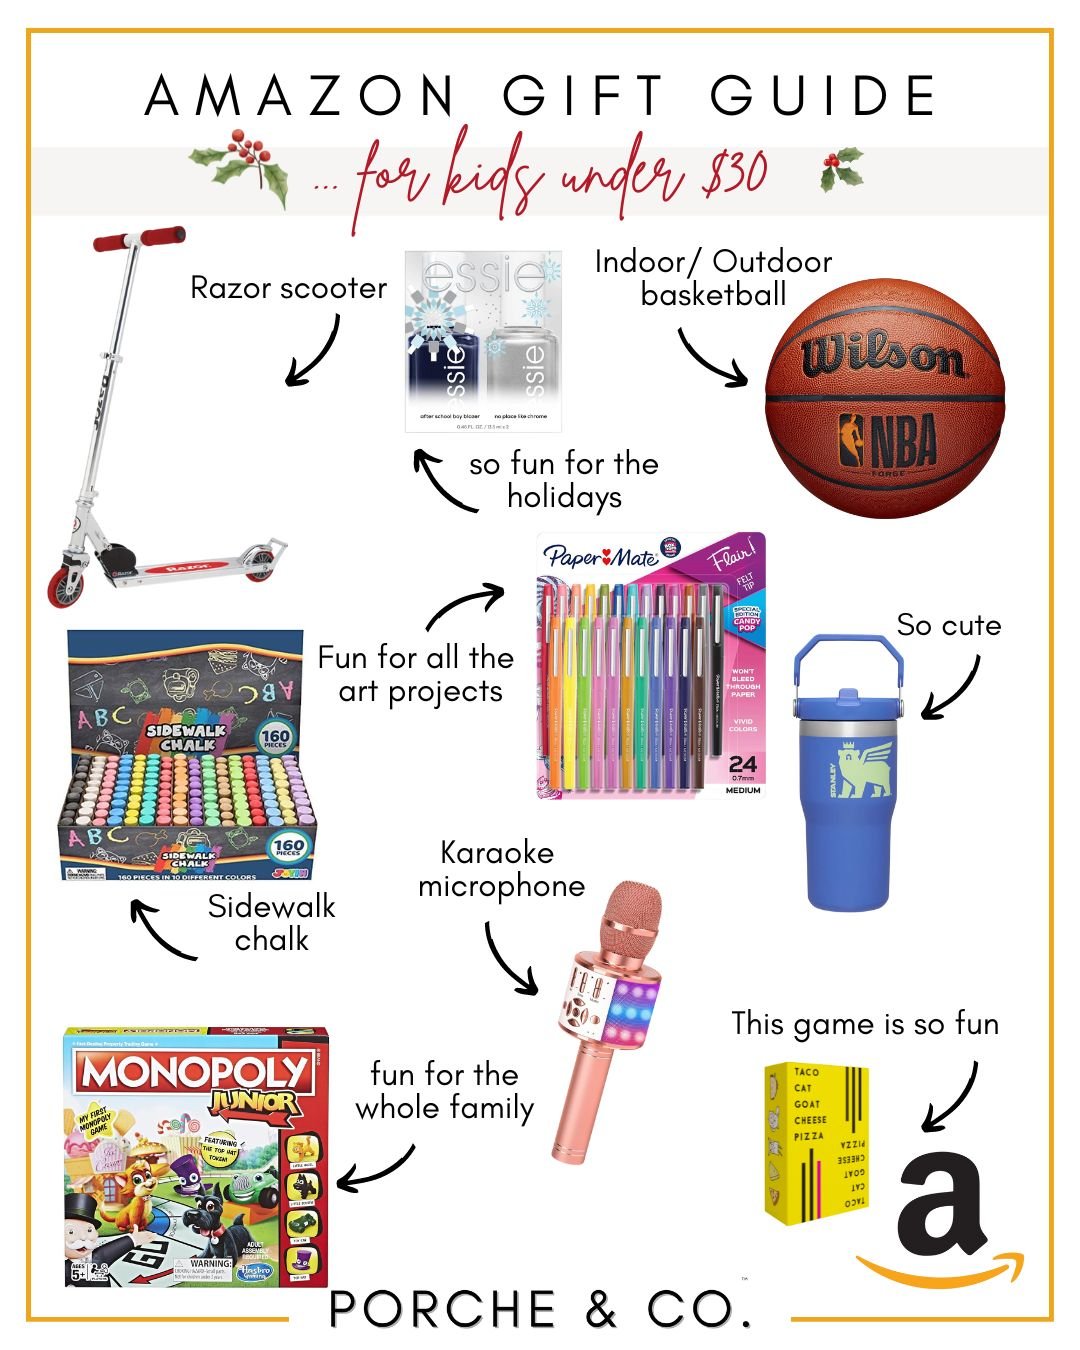 Amazon Gift Guides (27).jpg